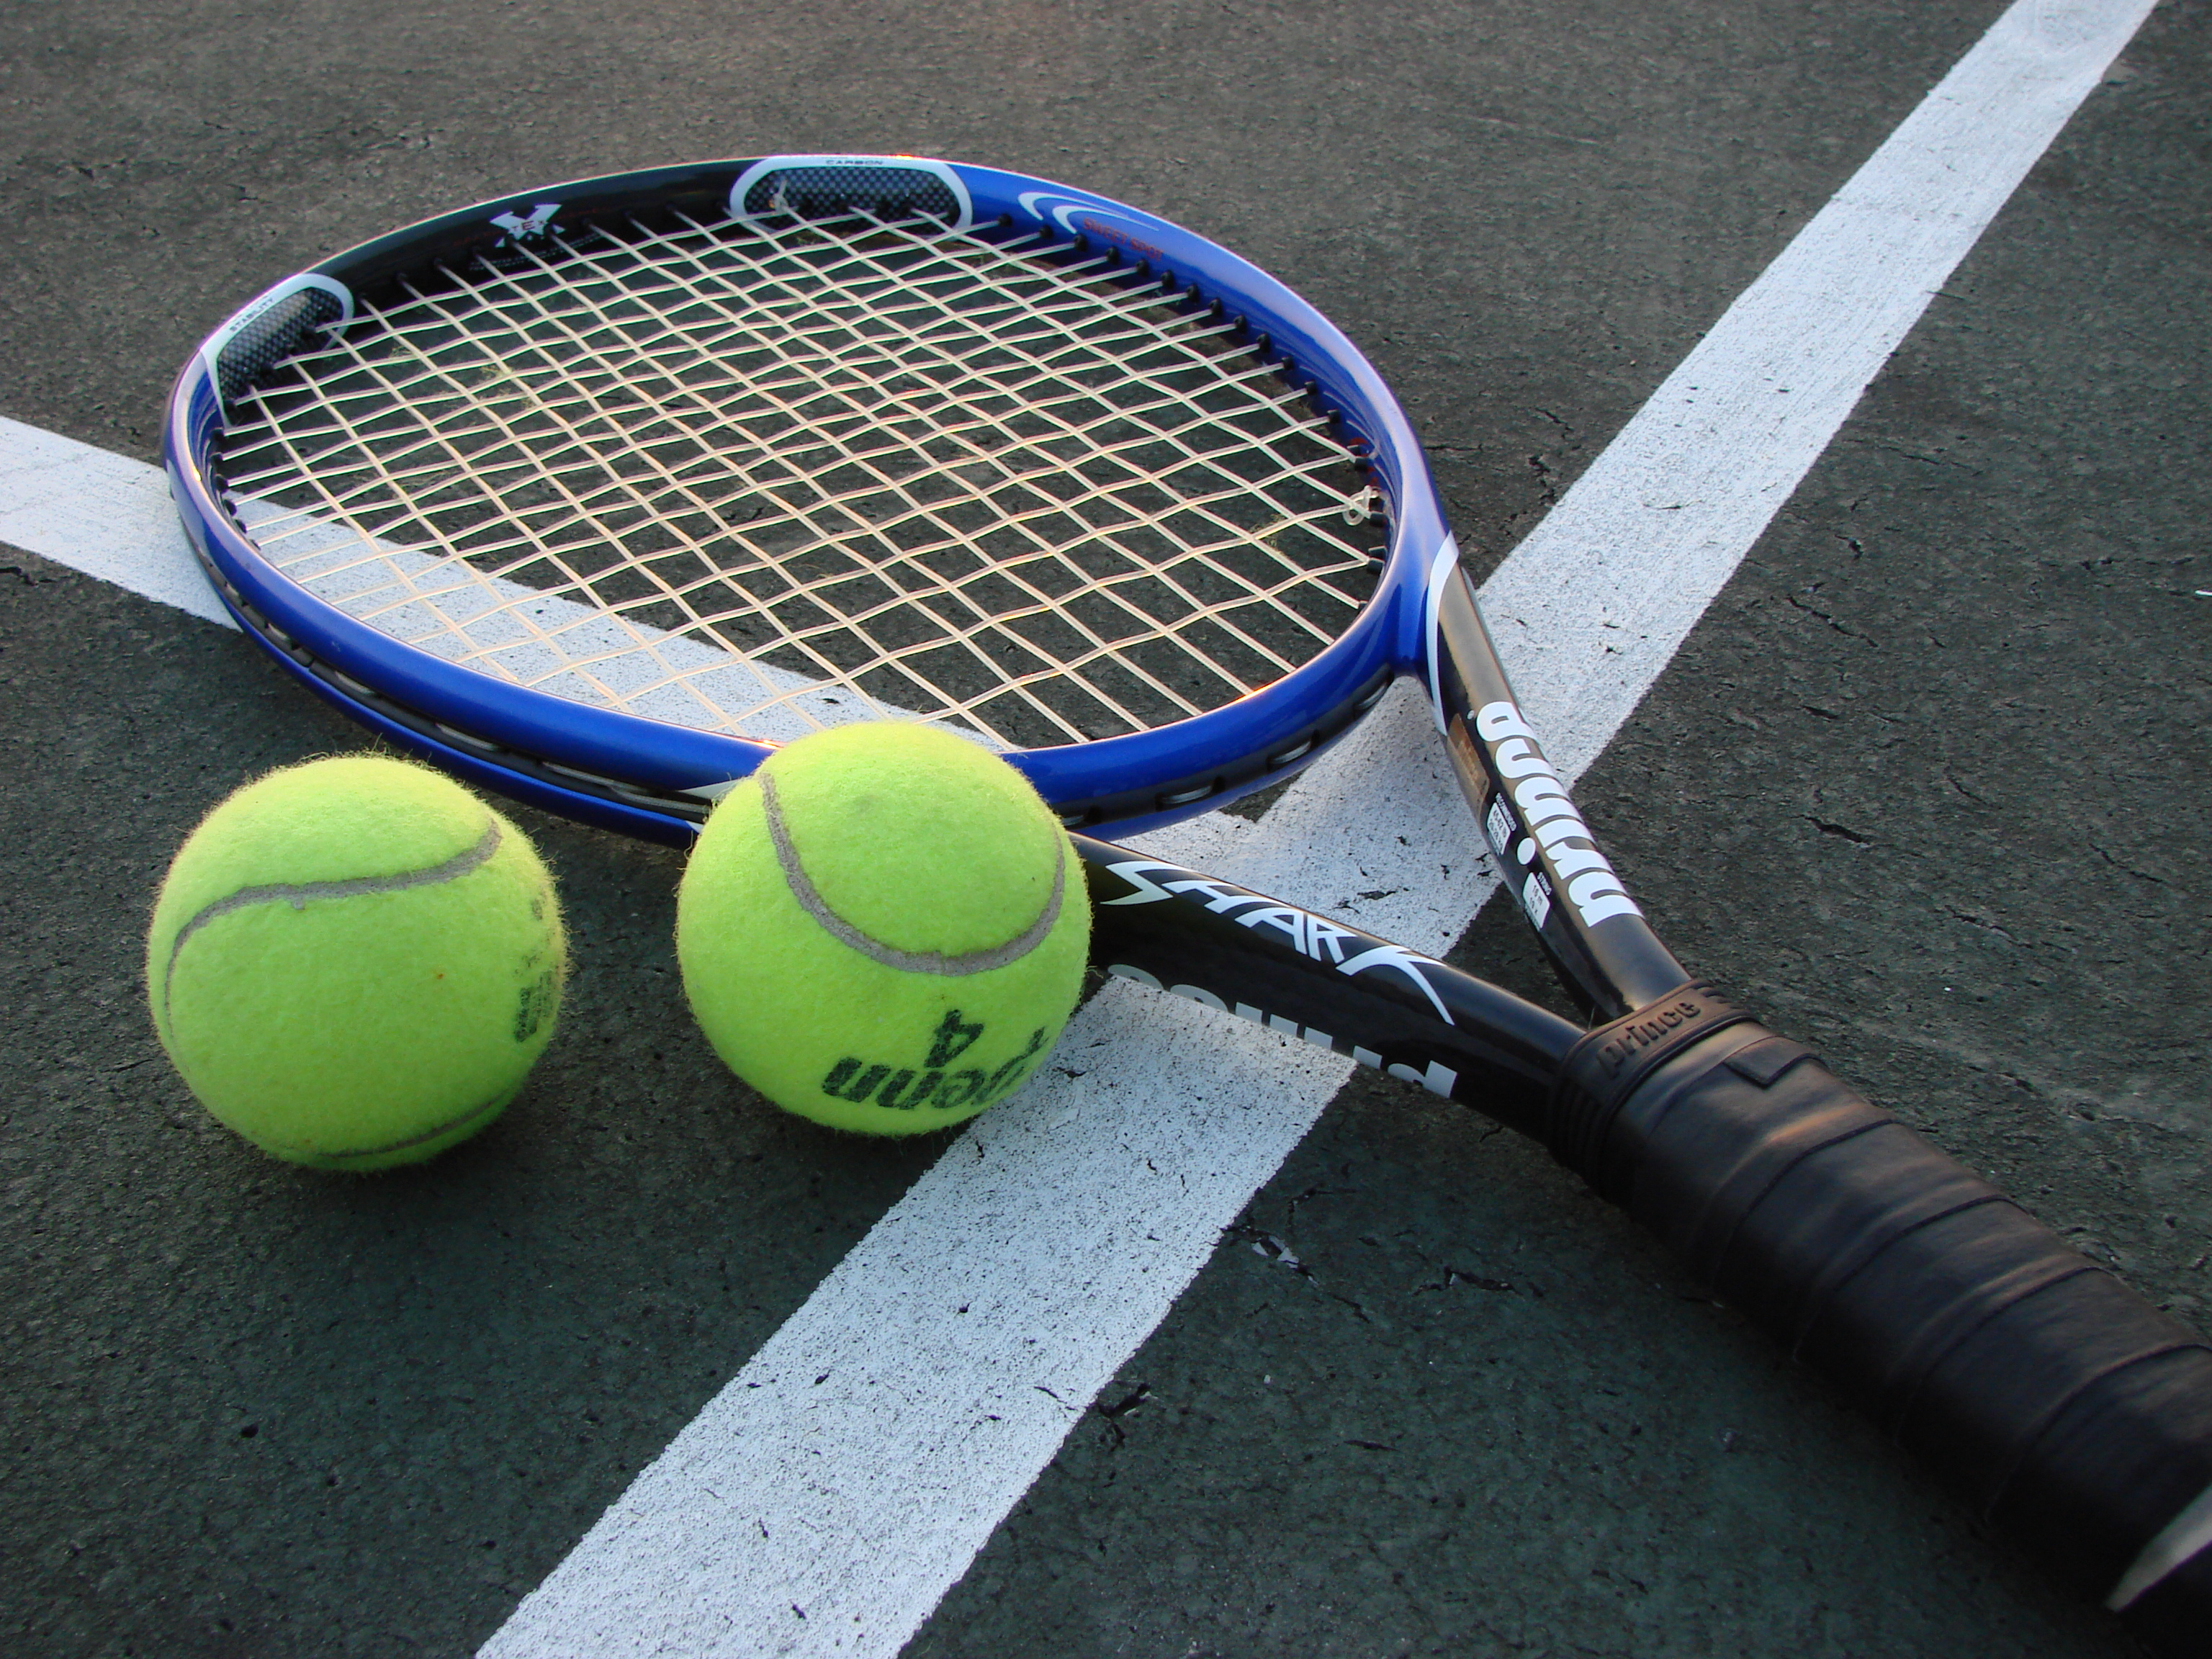 File:Tennis Racket and Balls.jpg - Wikipedia, the free encyclopedia